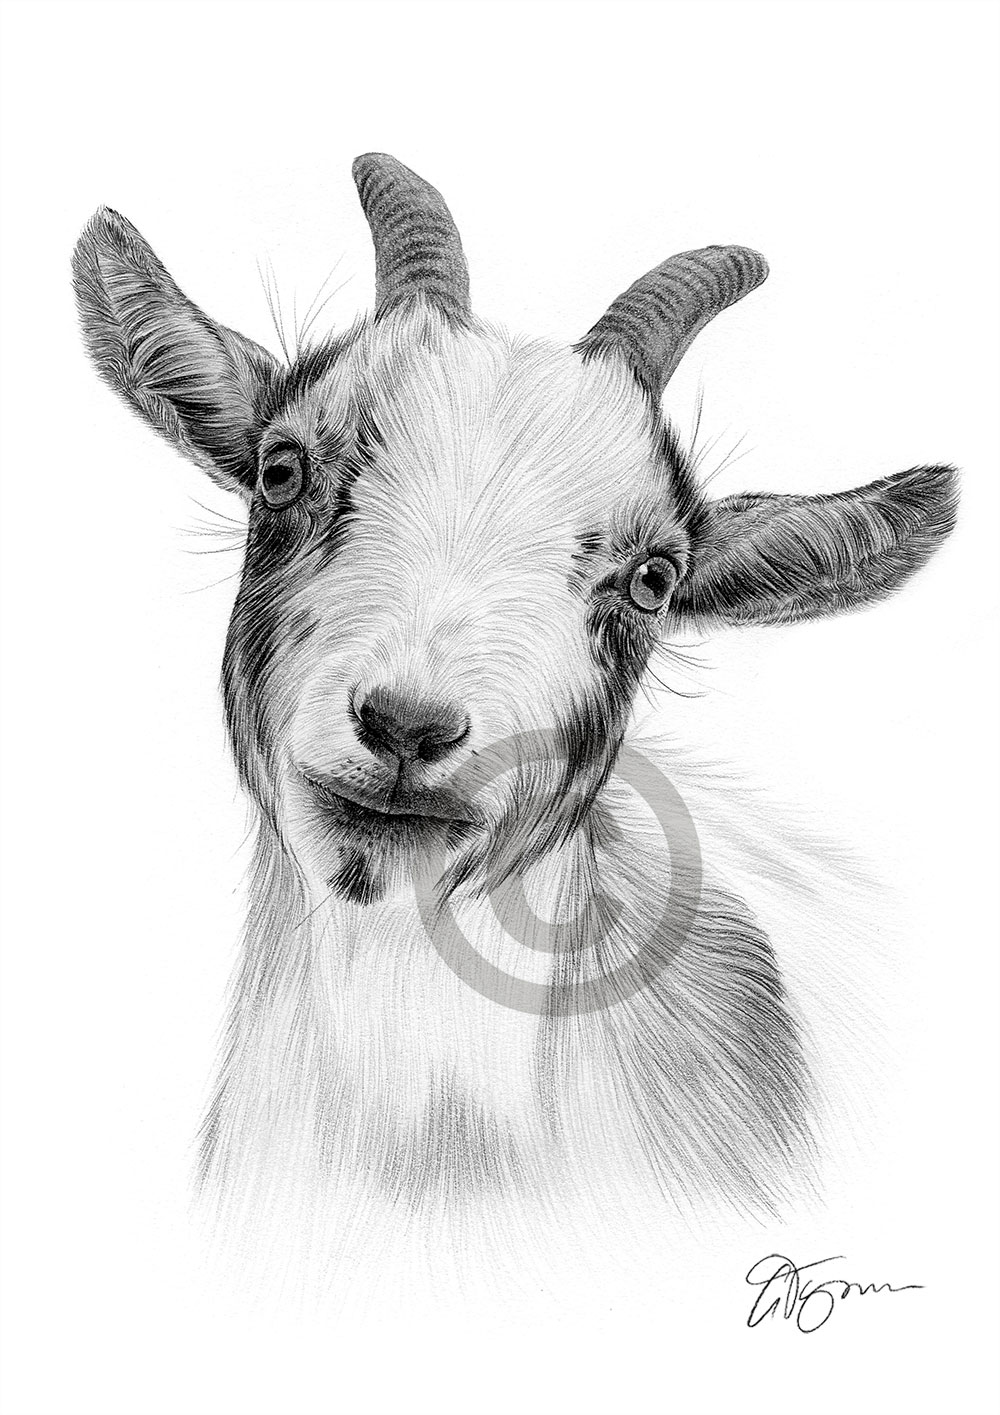 Pencil drawing of a pygmy goat by artist Gary Tymon